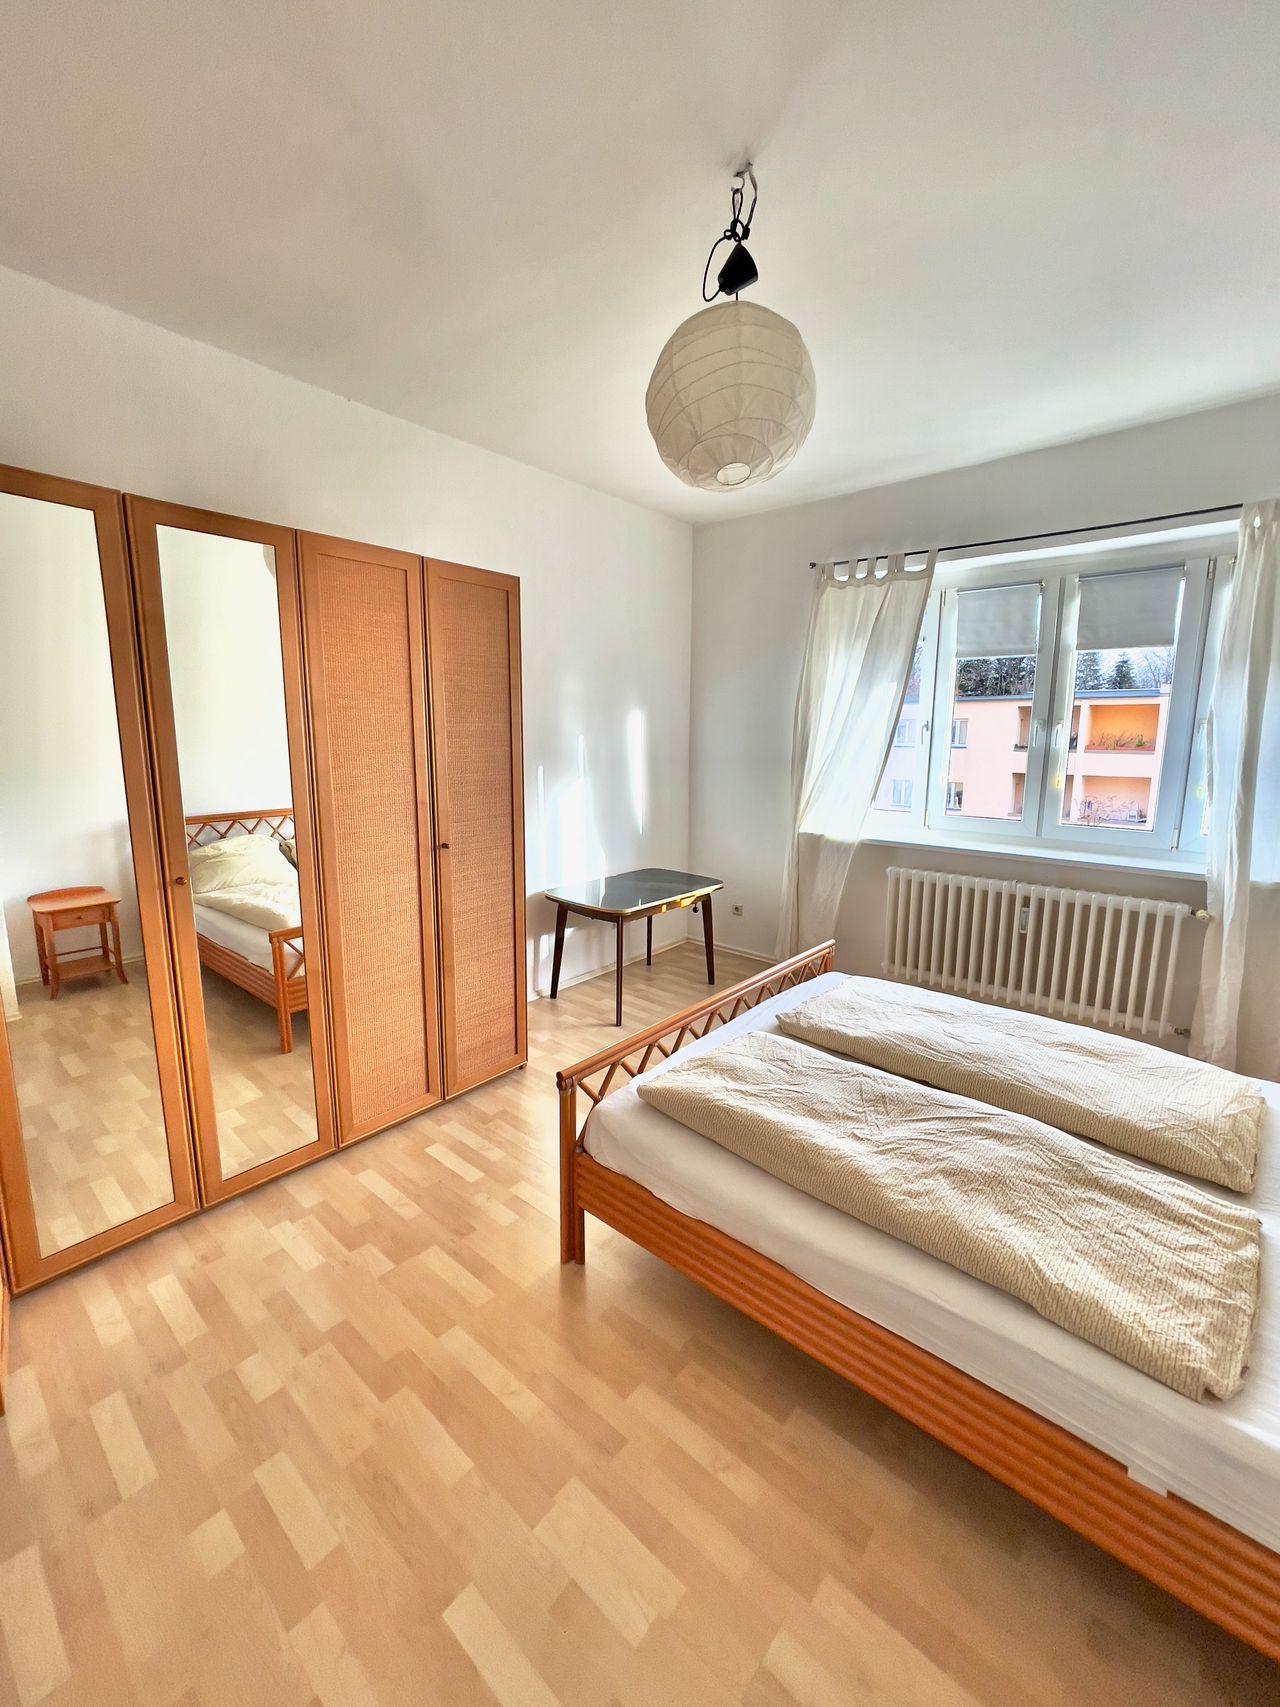 Lovely apartment in Steglitz